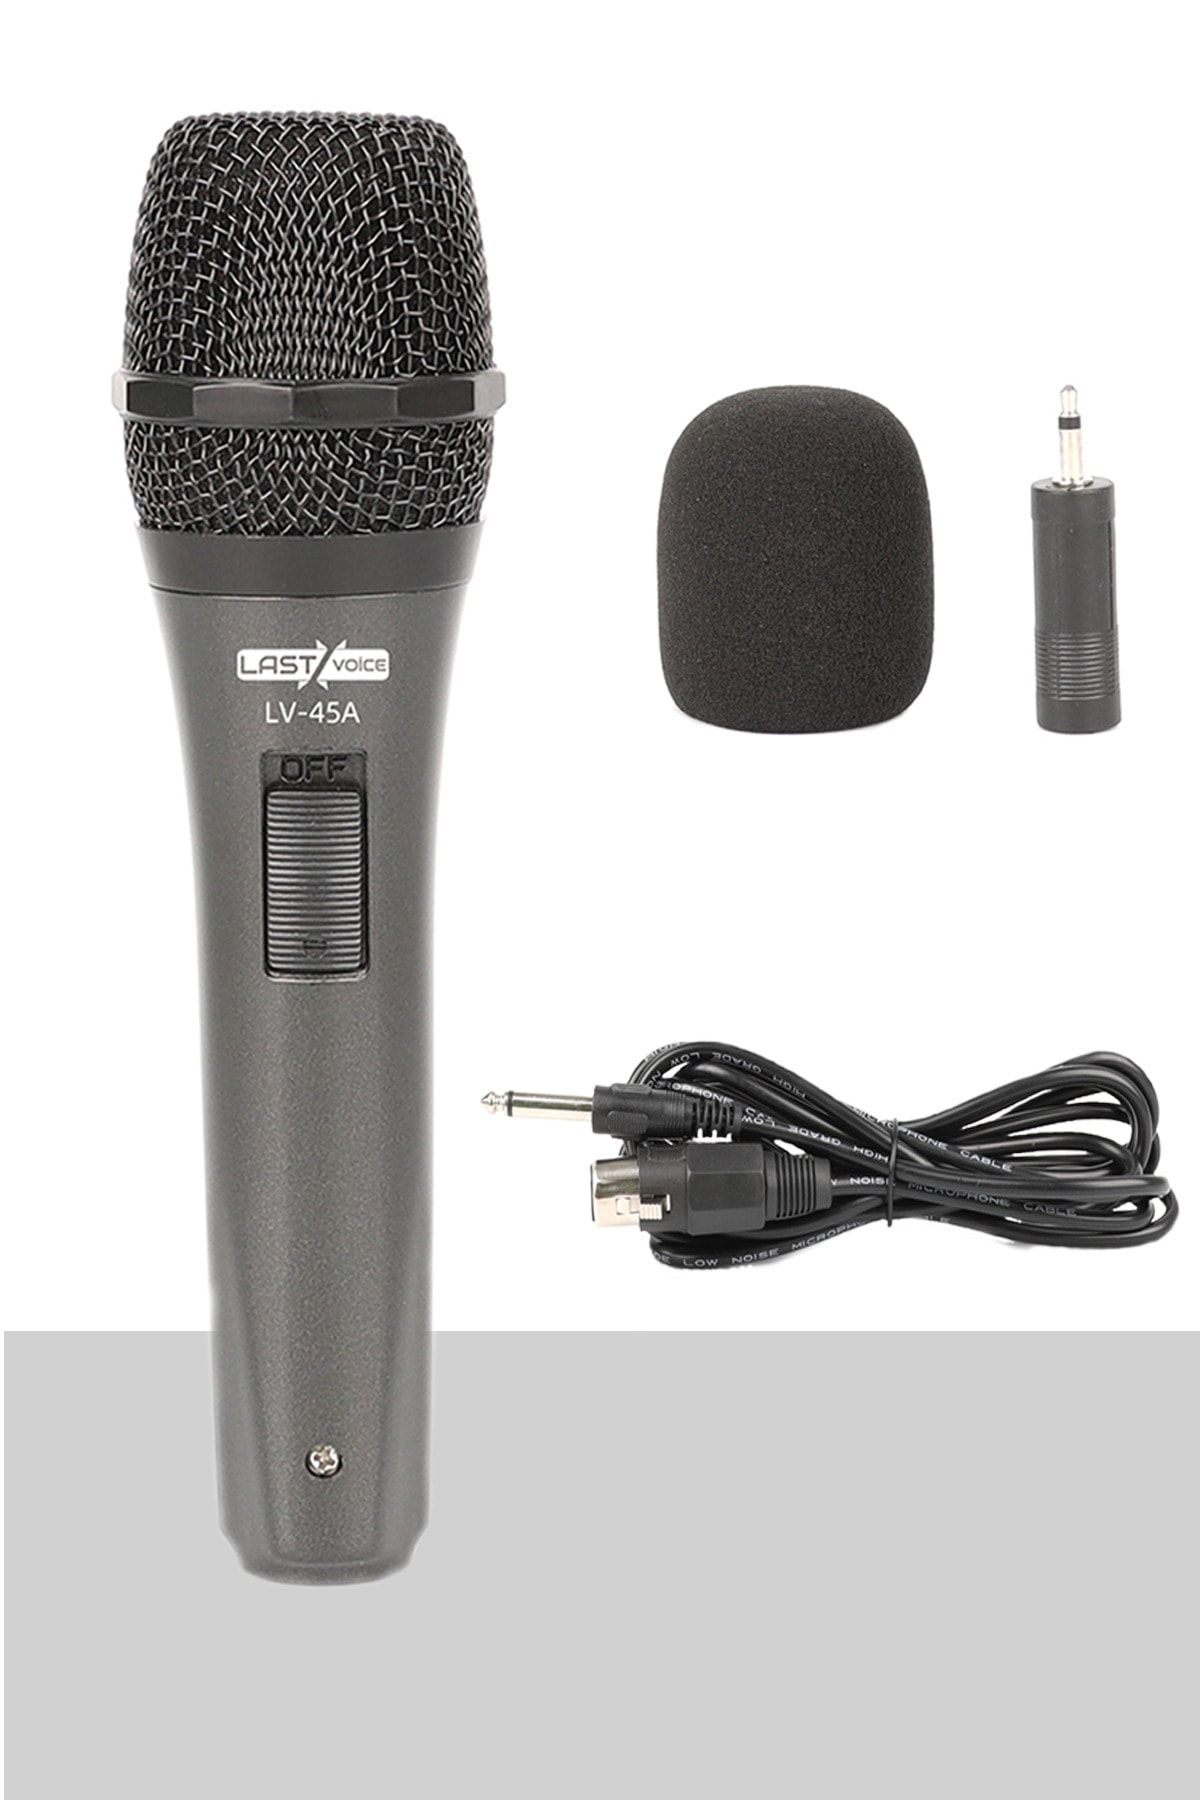 Lastvoice Lv-45a Dinamik Kablolu El Mikrofon (KABLO SÜNGER VE APARAT HEDİYELİ)